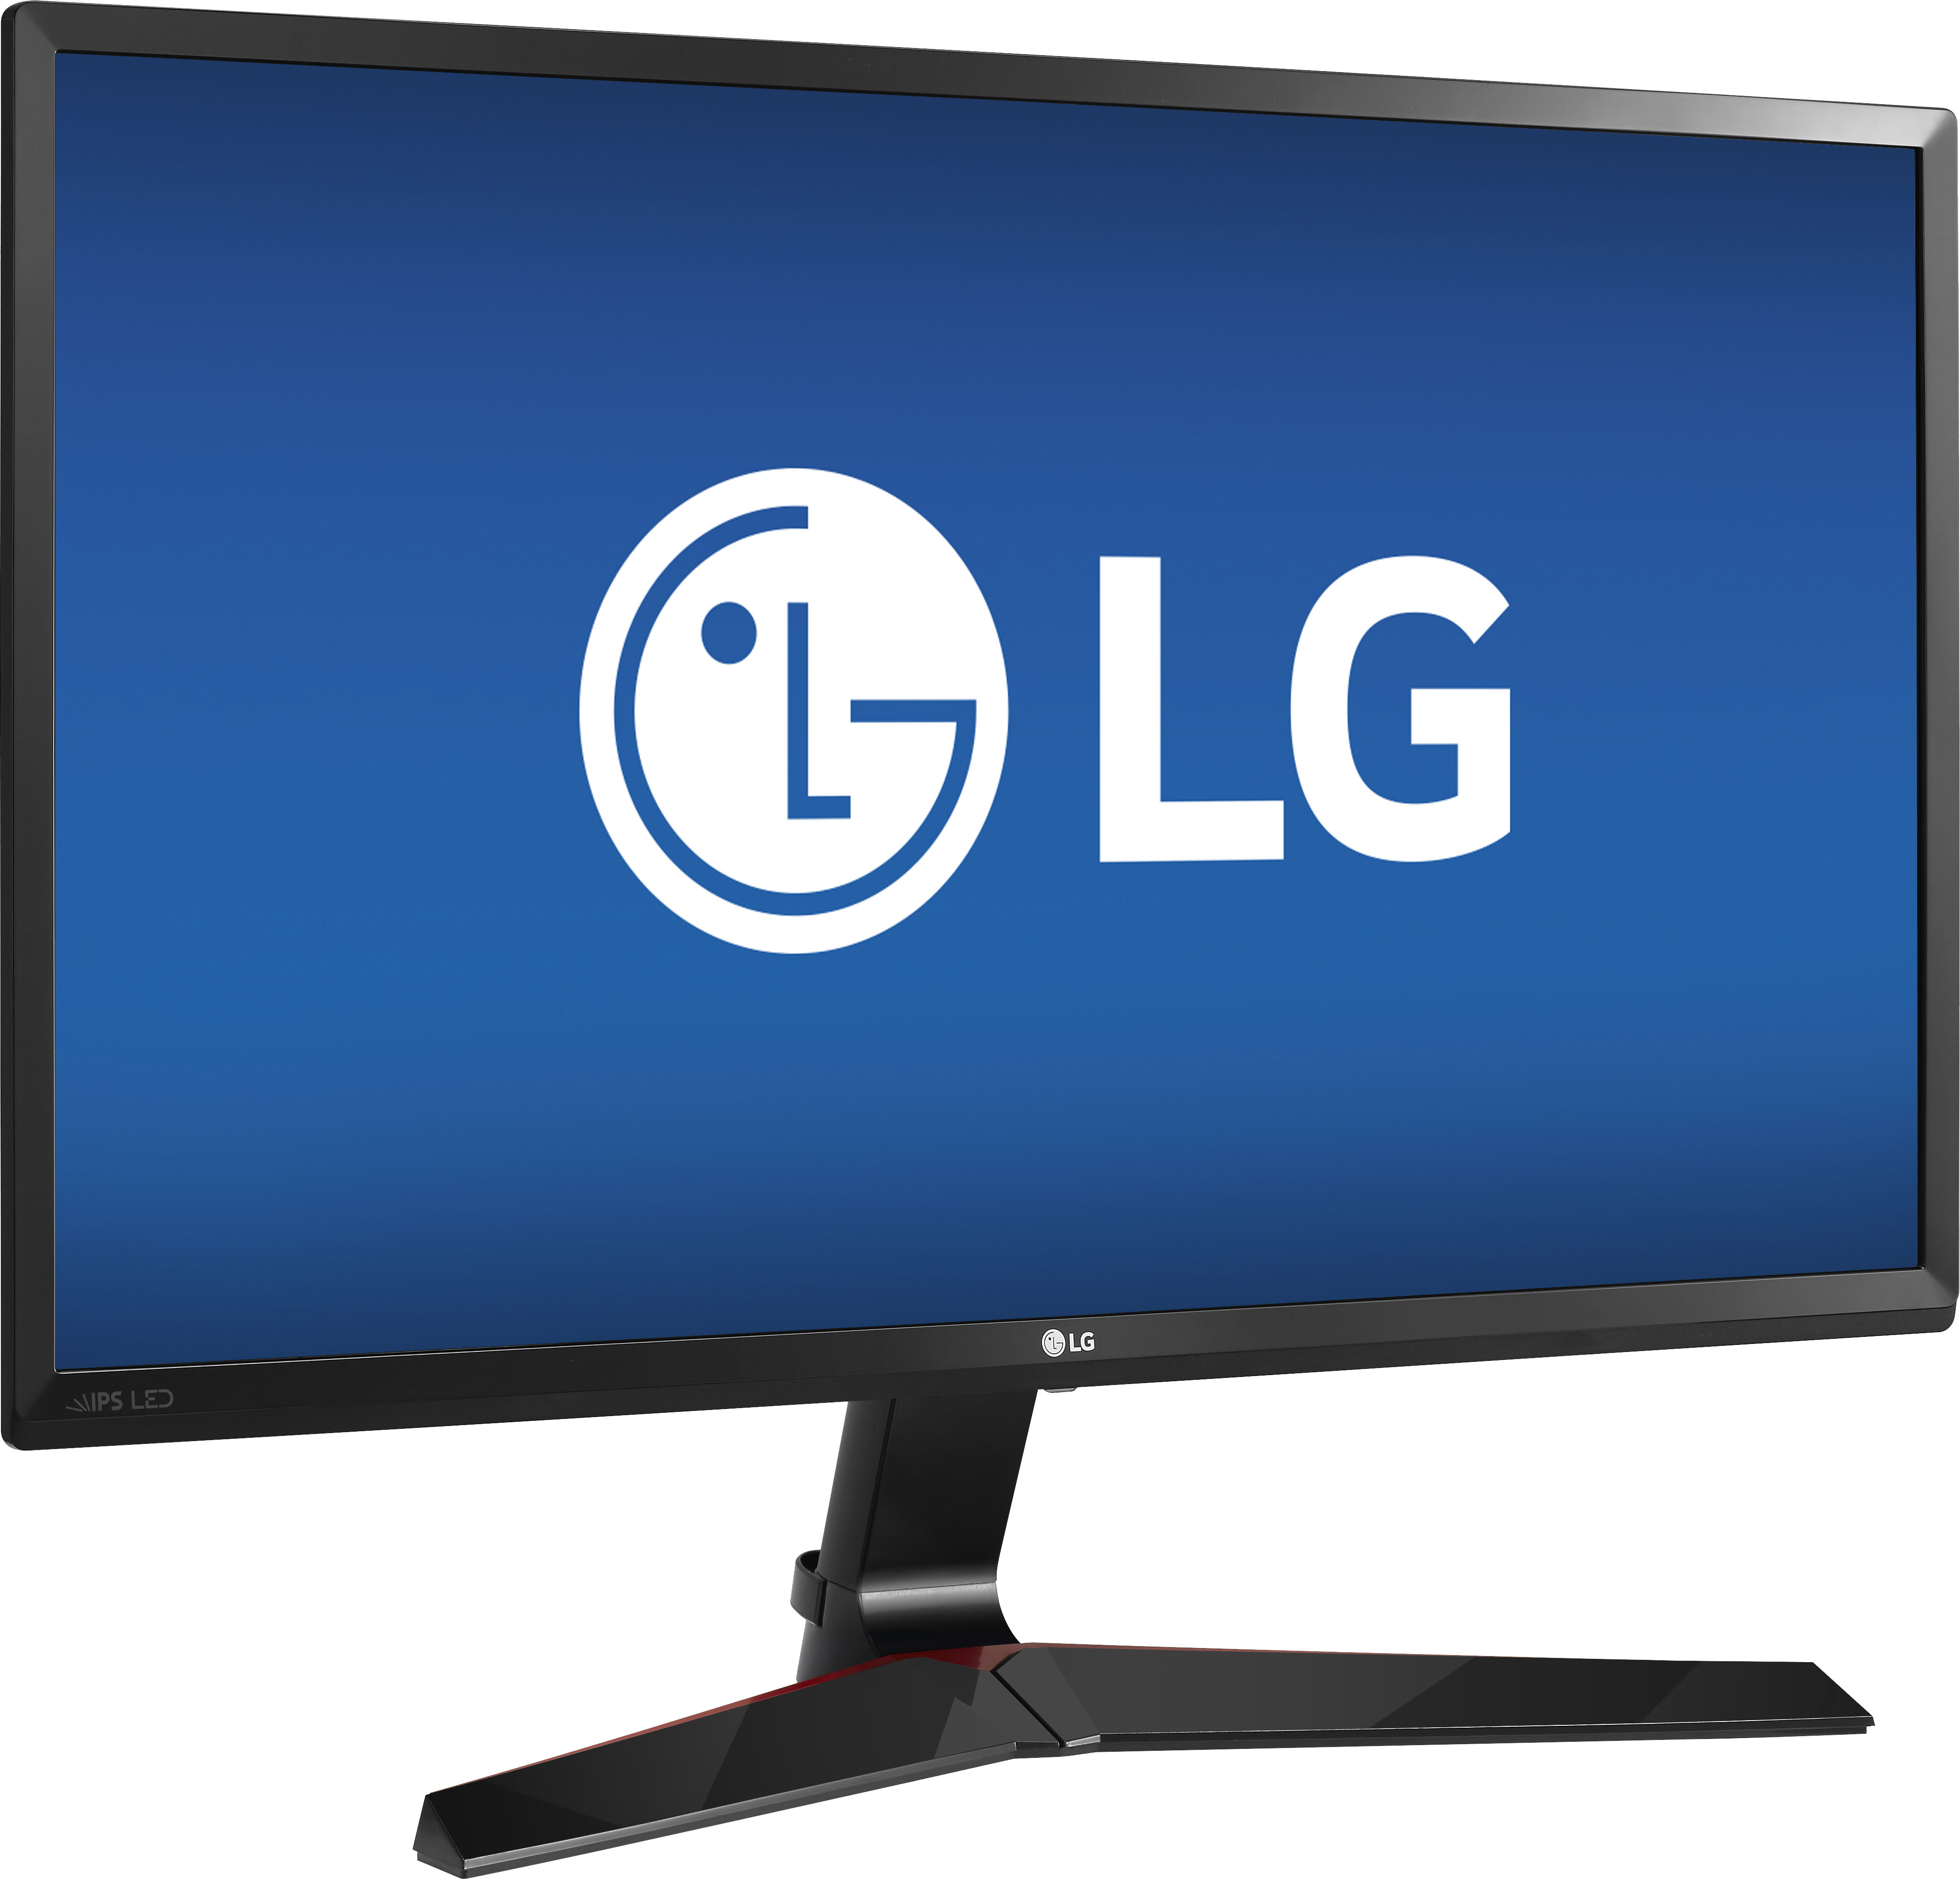 Angle View: LG - 27" IPS LED FHD FreeSync Monitor (HDMI, Display Port) - Black